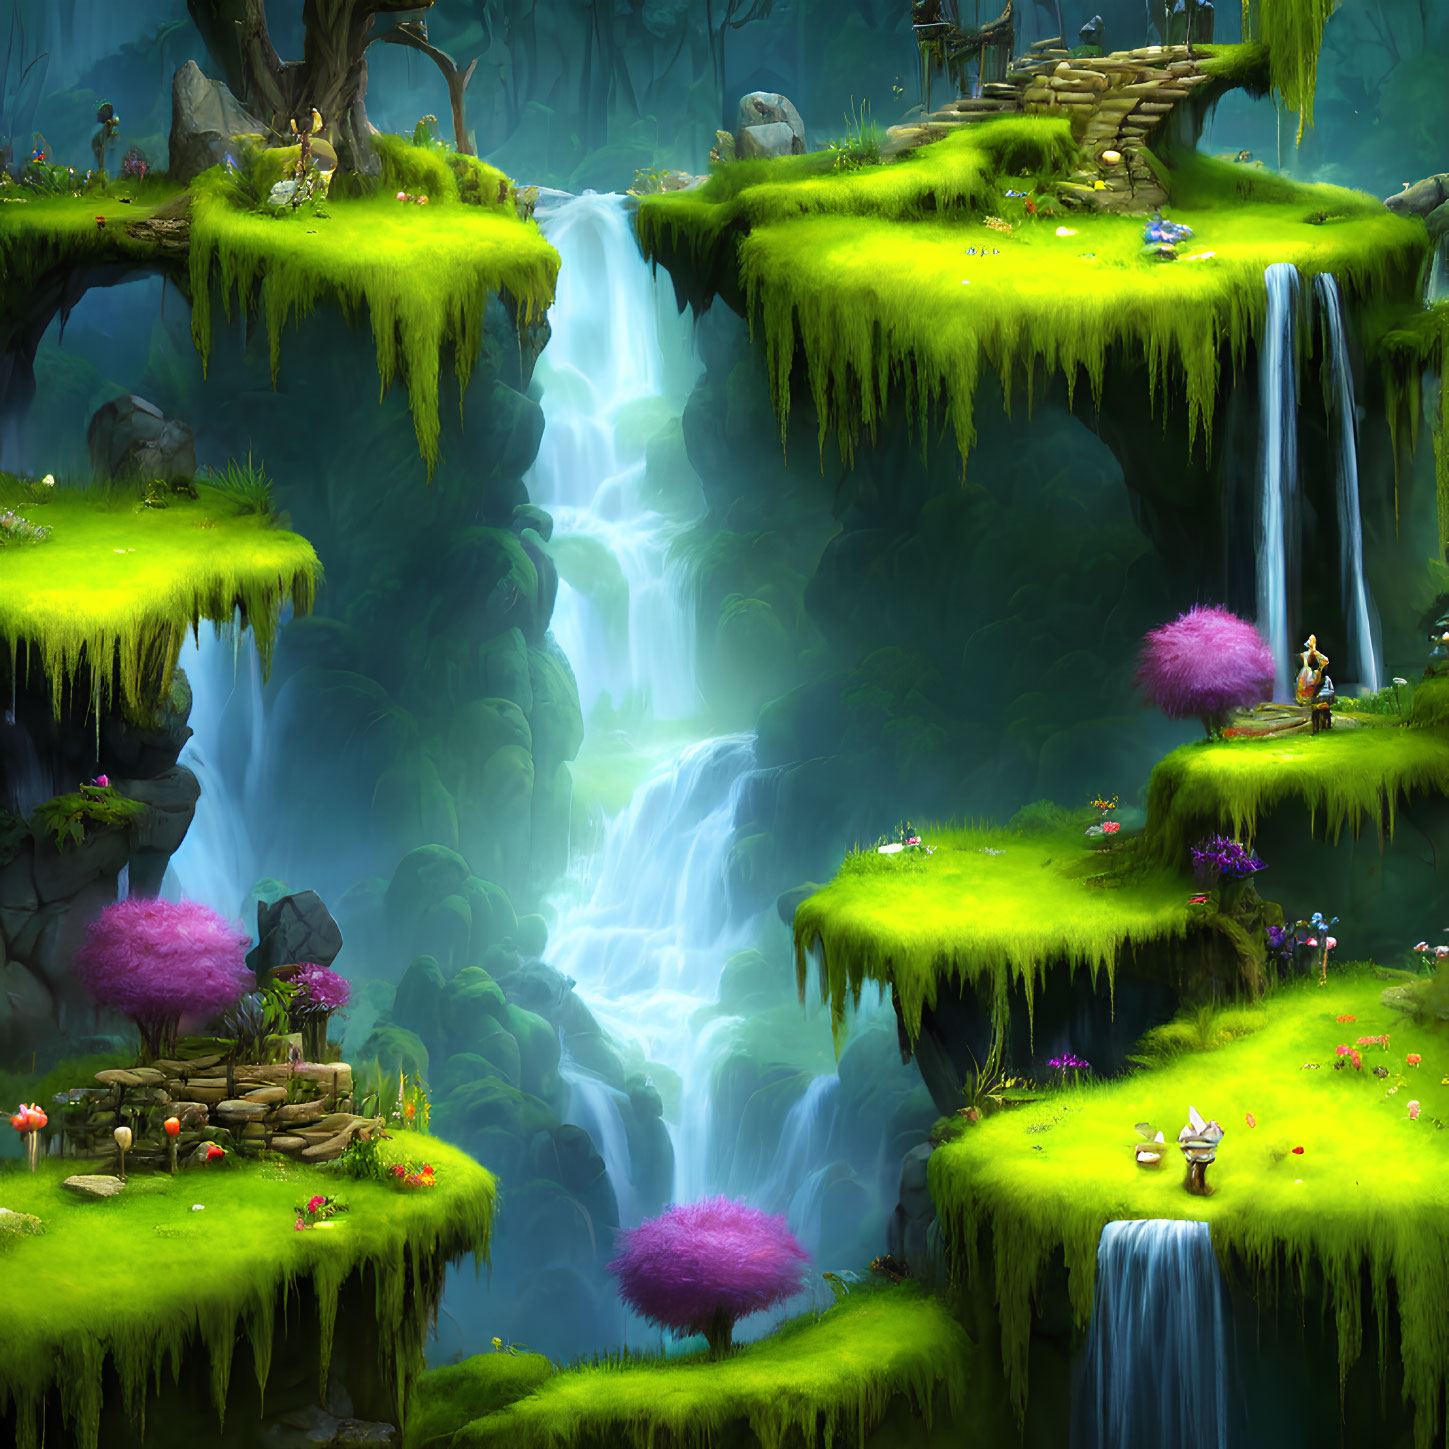 Fantasy landscape with waterfalls, floating islands, pink foliage, mushrooms, bridges